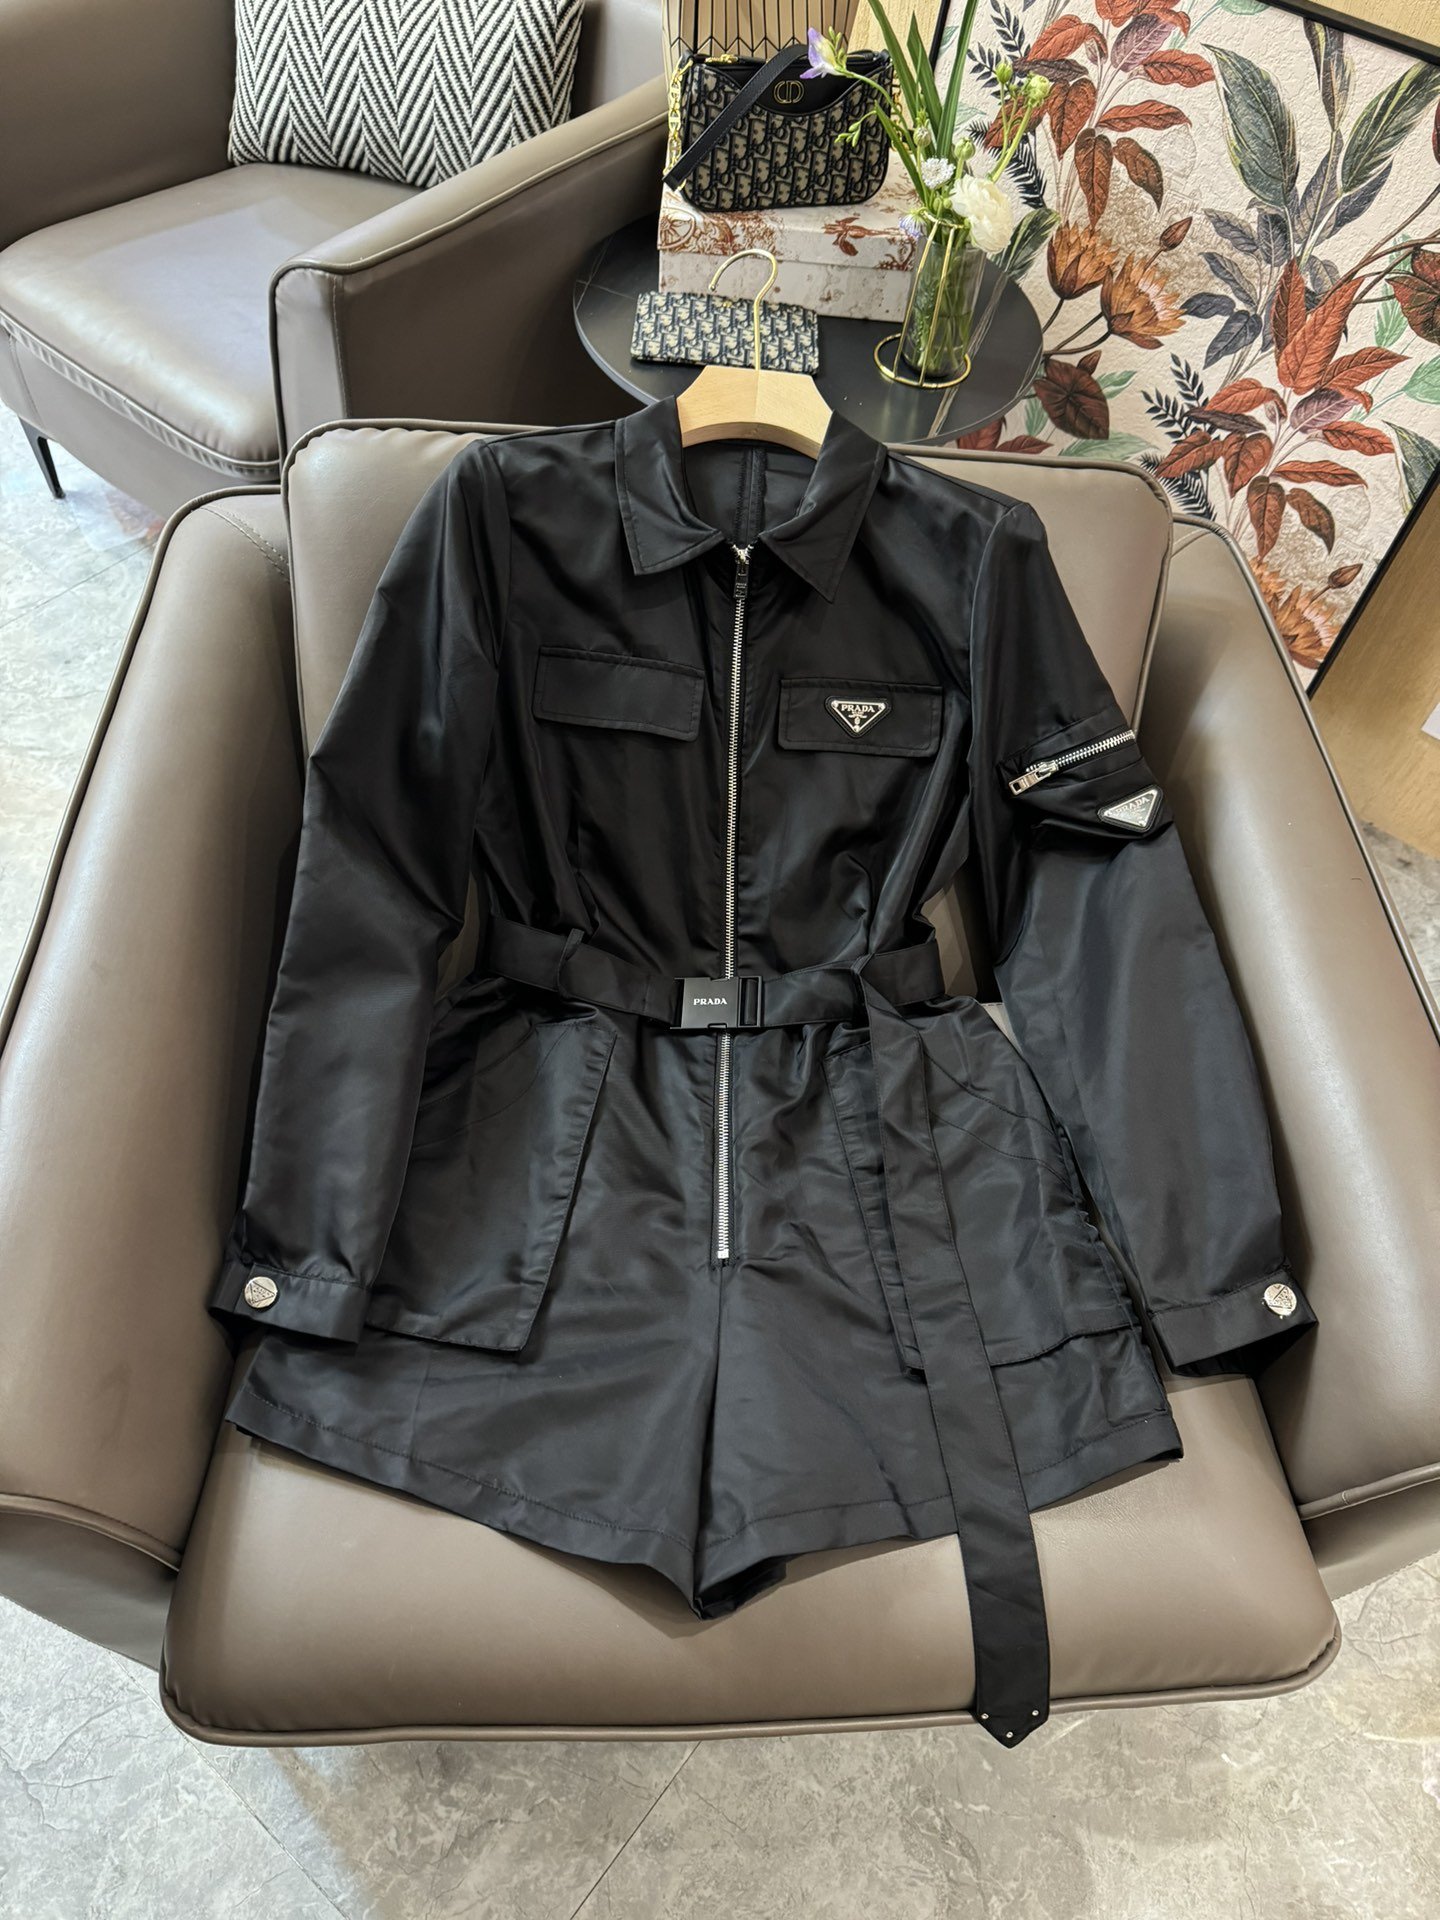 XC24029#新款连体裤PRADA三角标尼龙材质长袖连体裤黑色SML